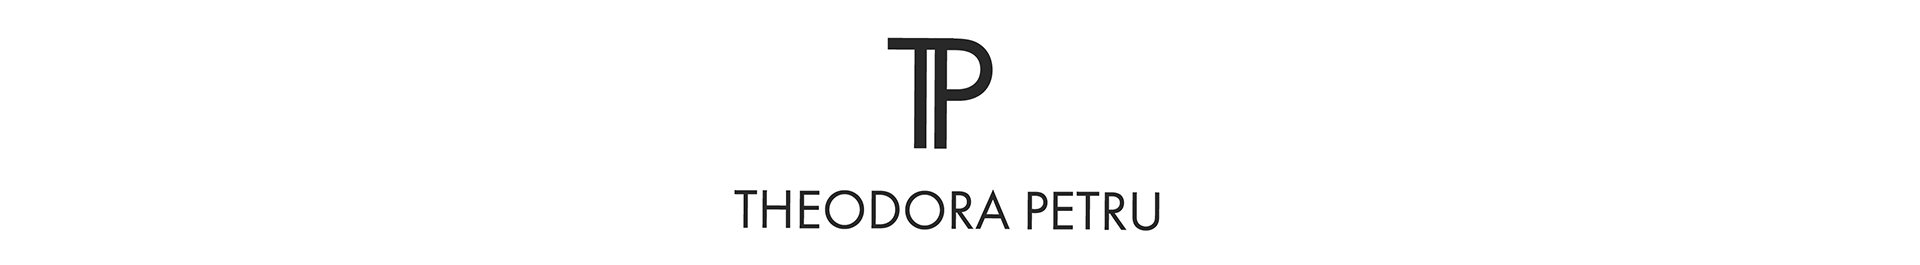 Theodora Petru's profile banner